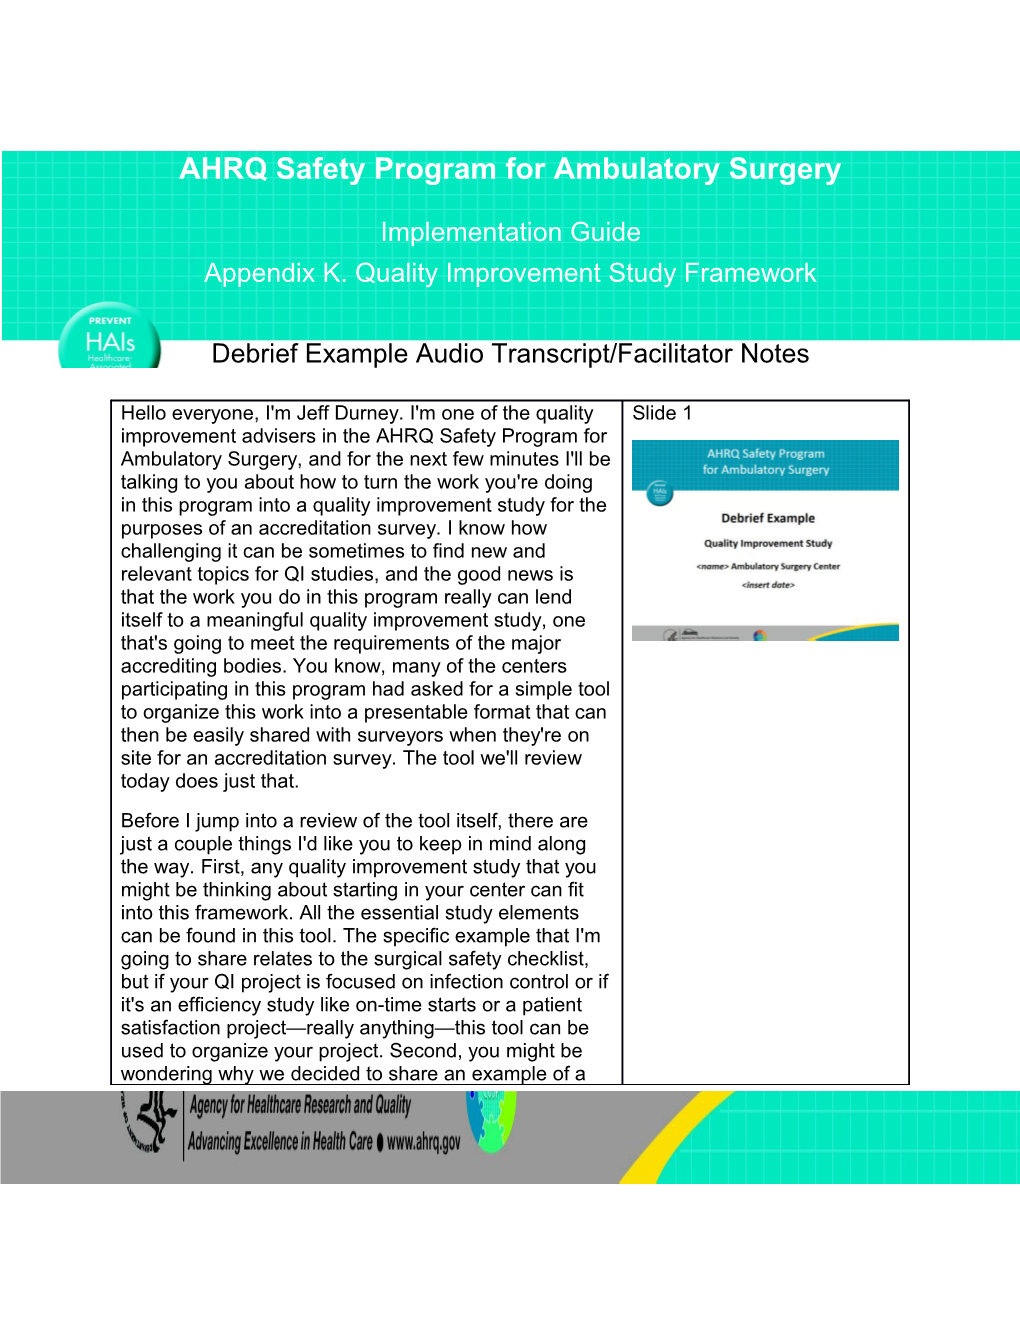 AHRQ Safety Program for Ambulatory Surgery